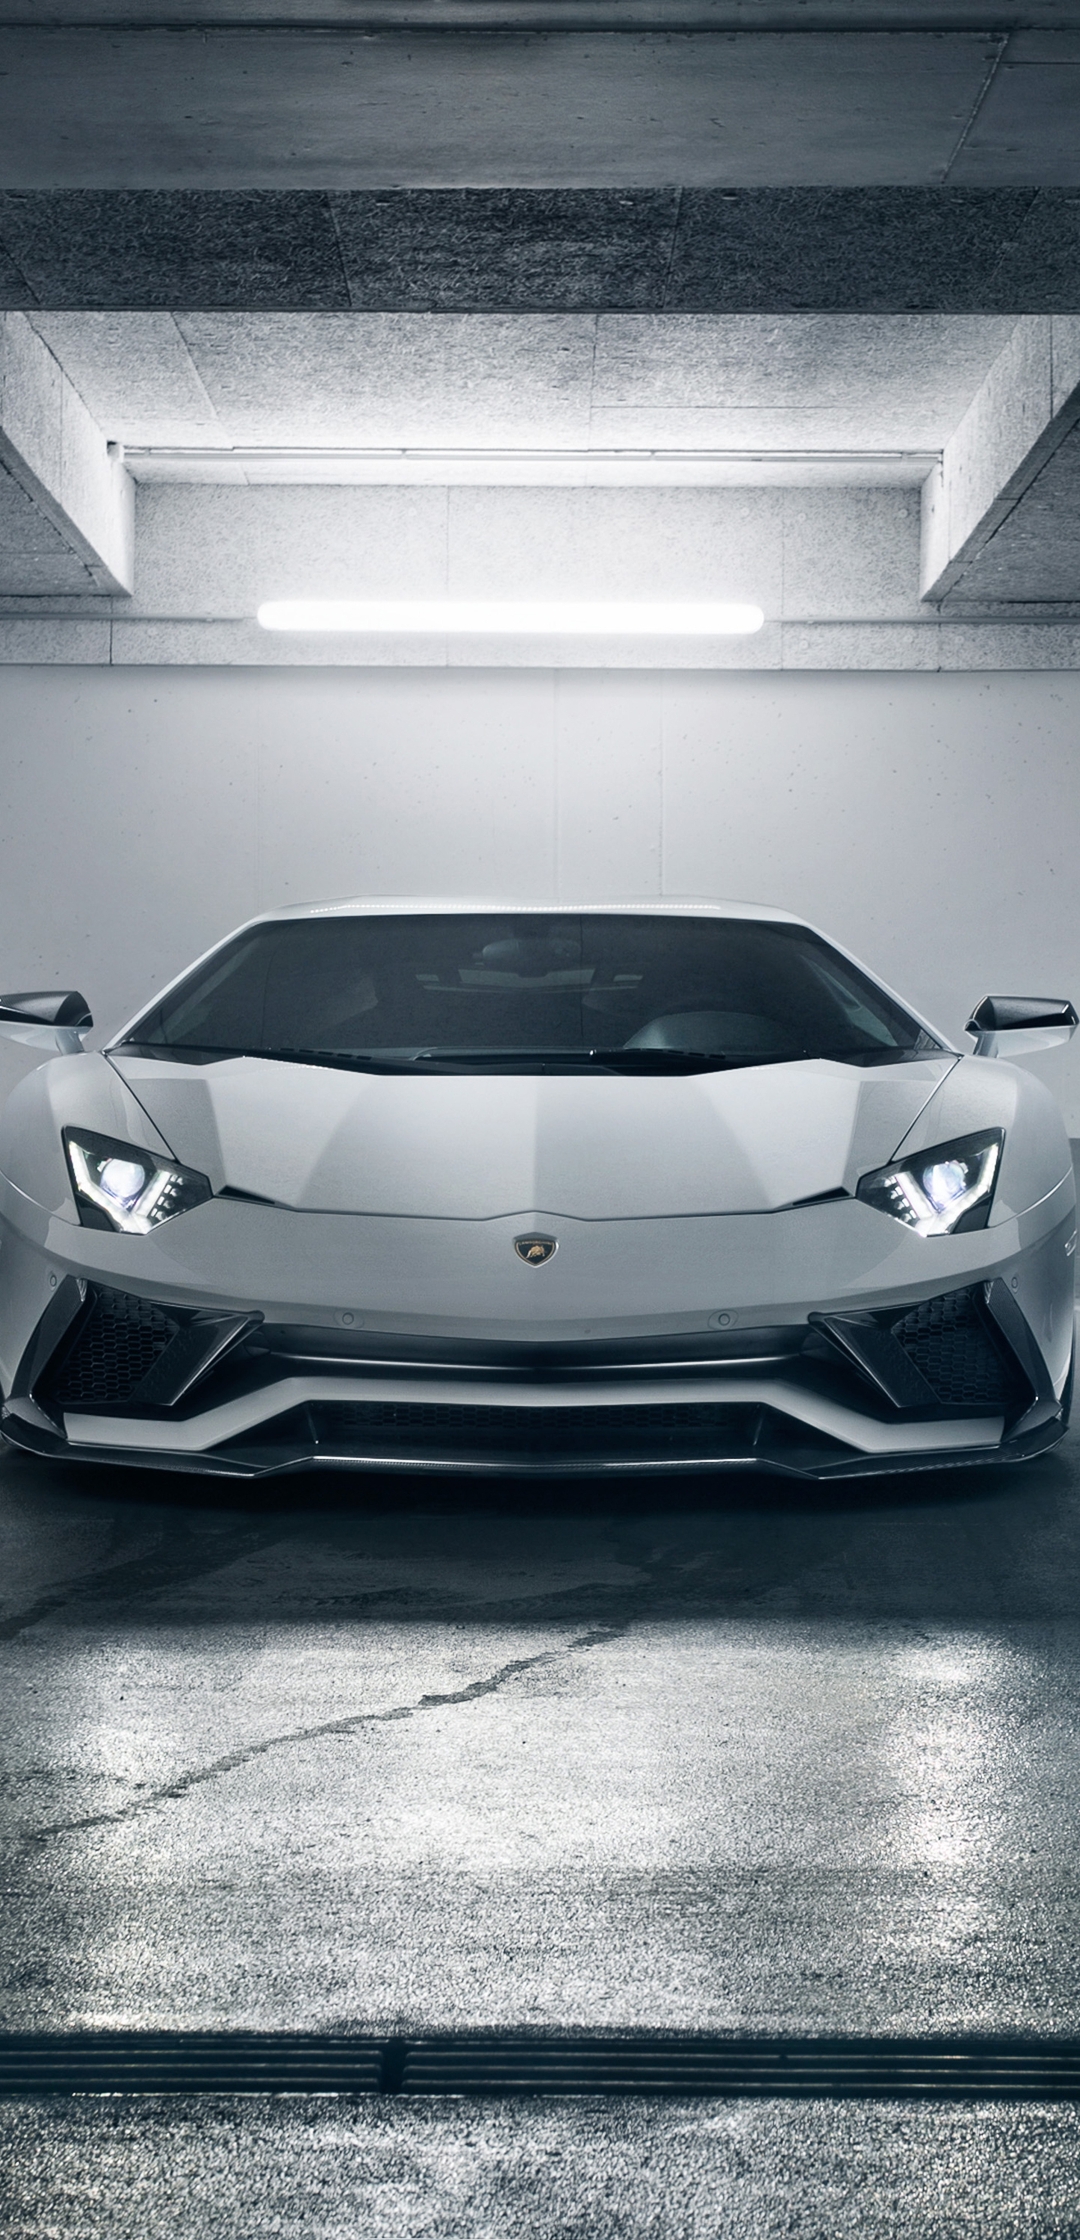 Image: Supercar, Lamborghini Aventador S, parking, white, lighting